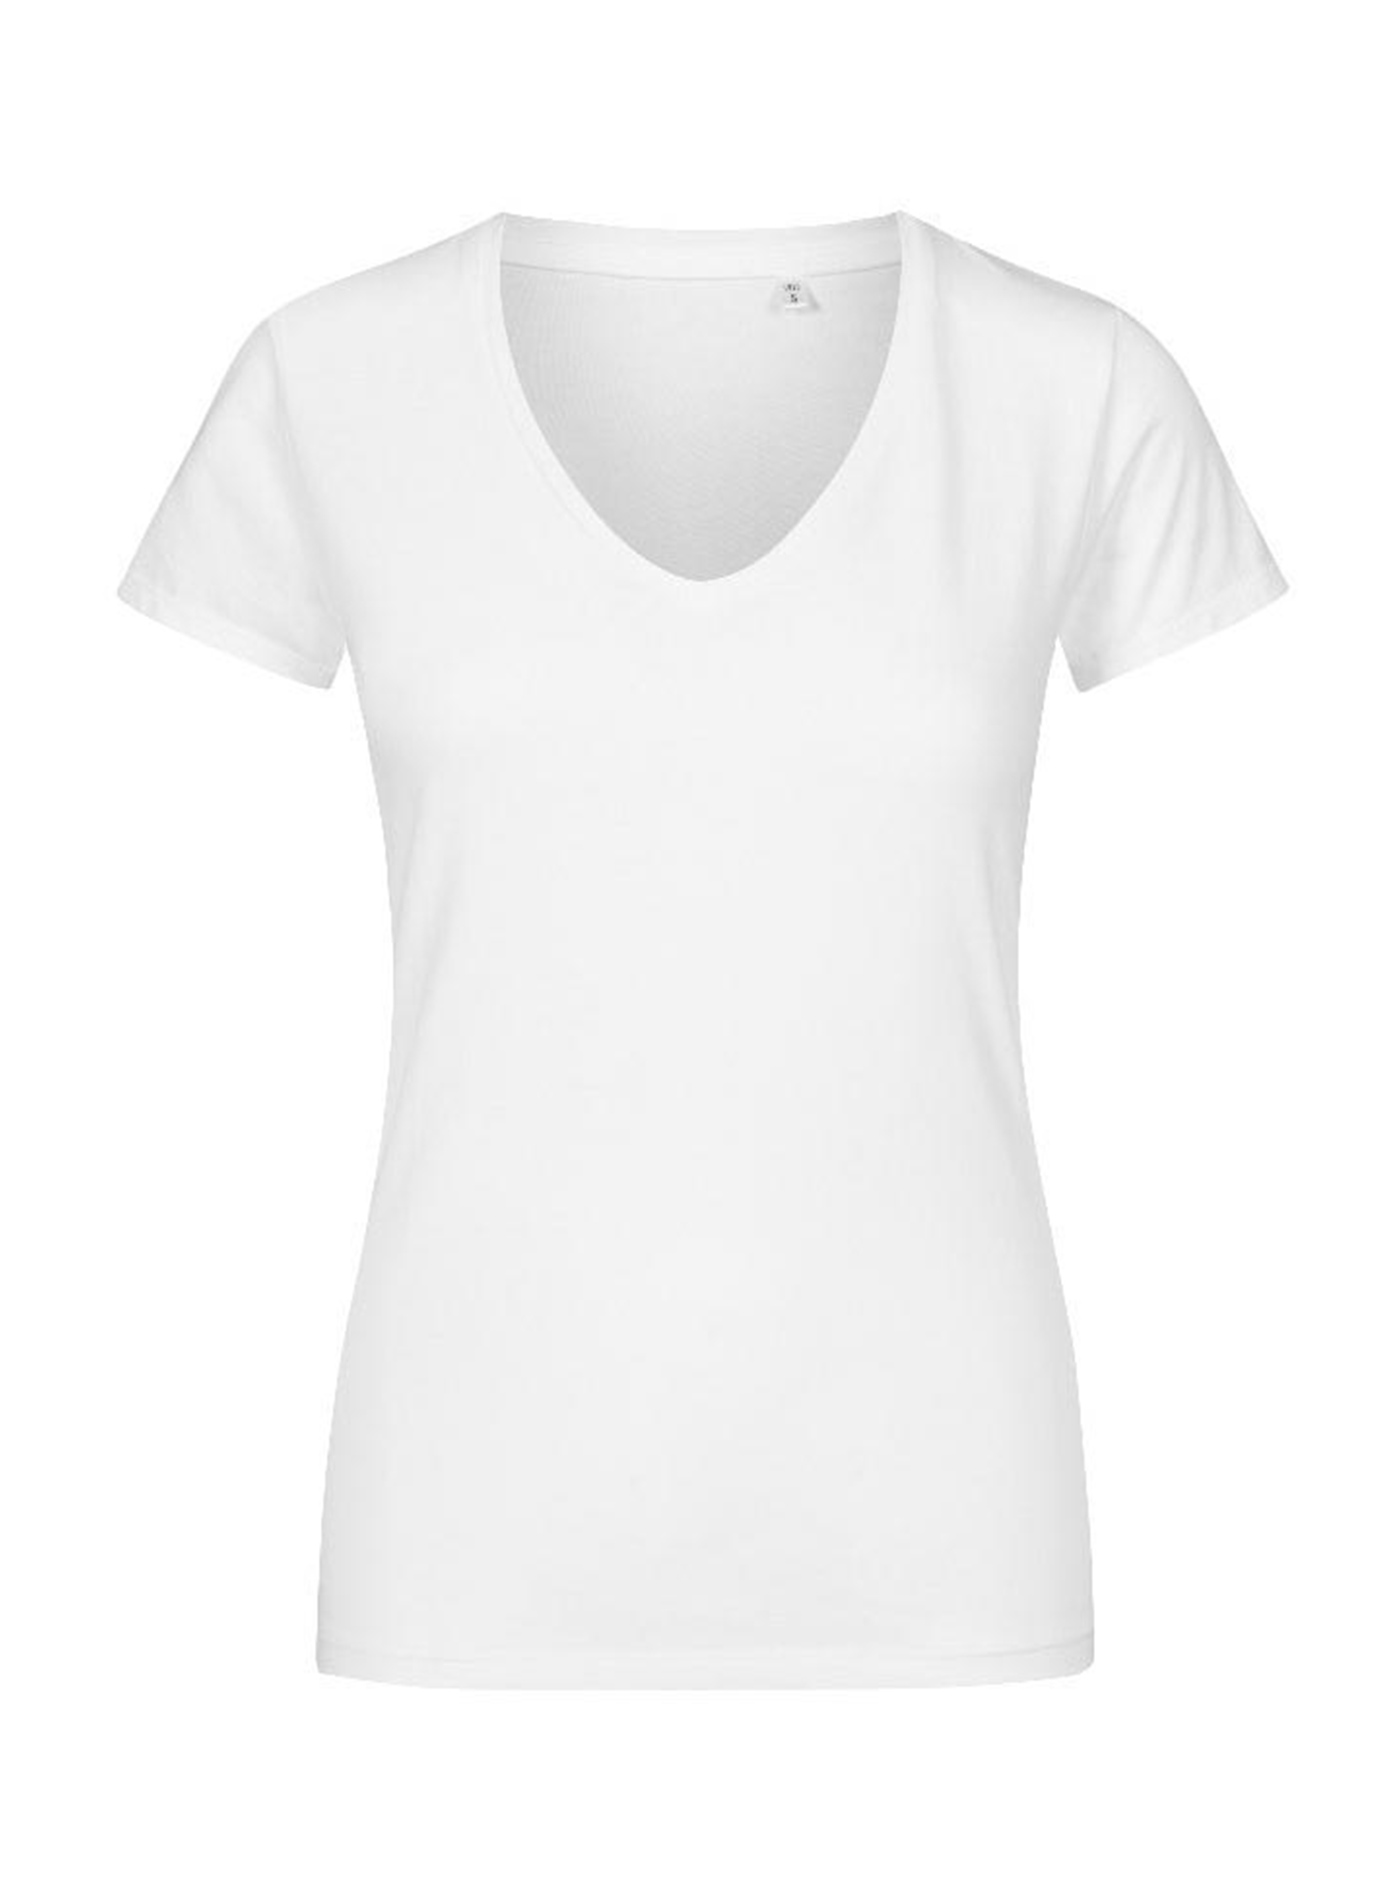 Dámské tričko Promodoro - Bílá L